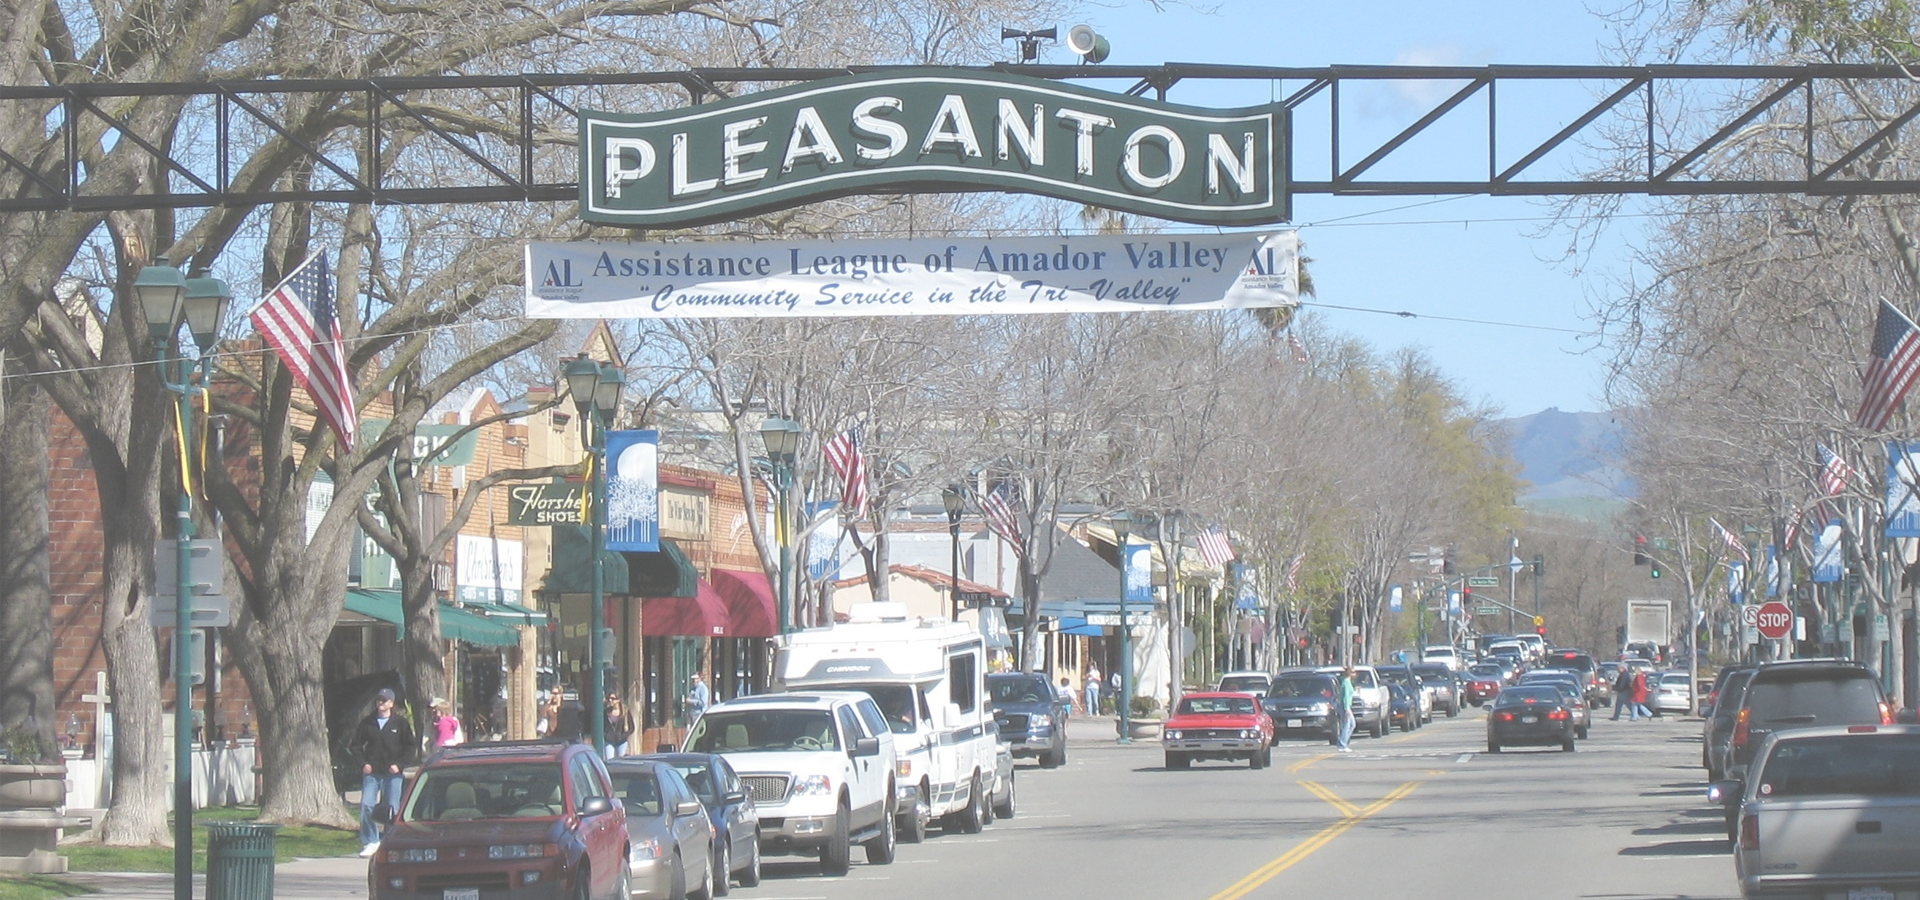 <b>Pleasanton, California, United States</b>